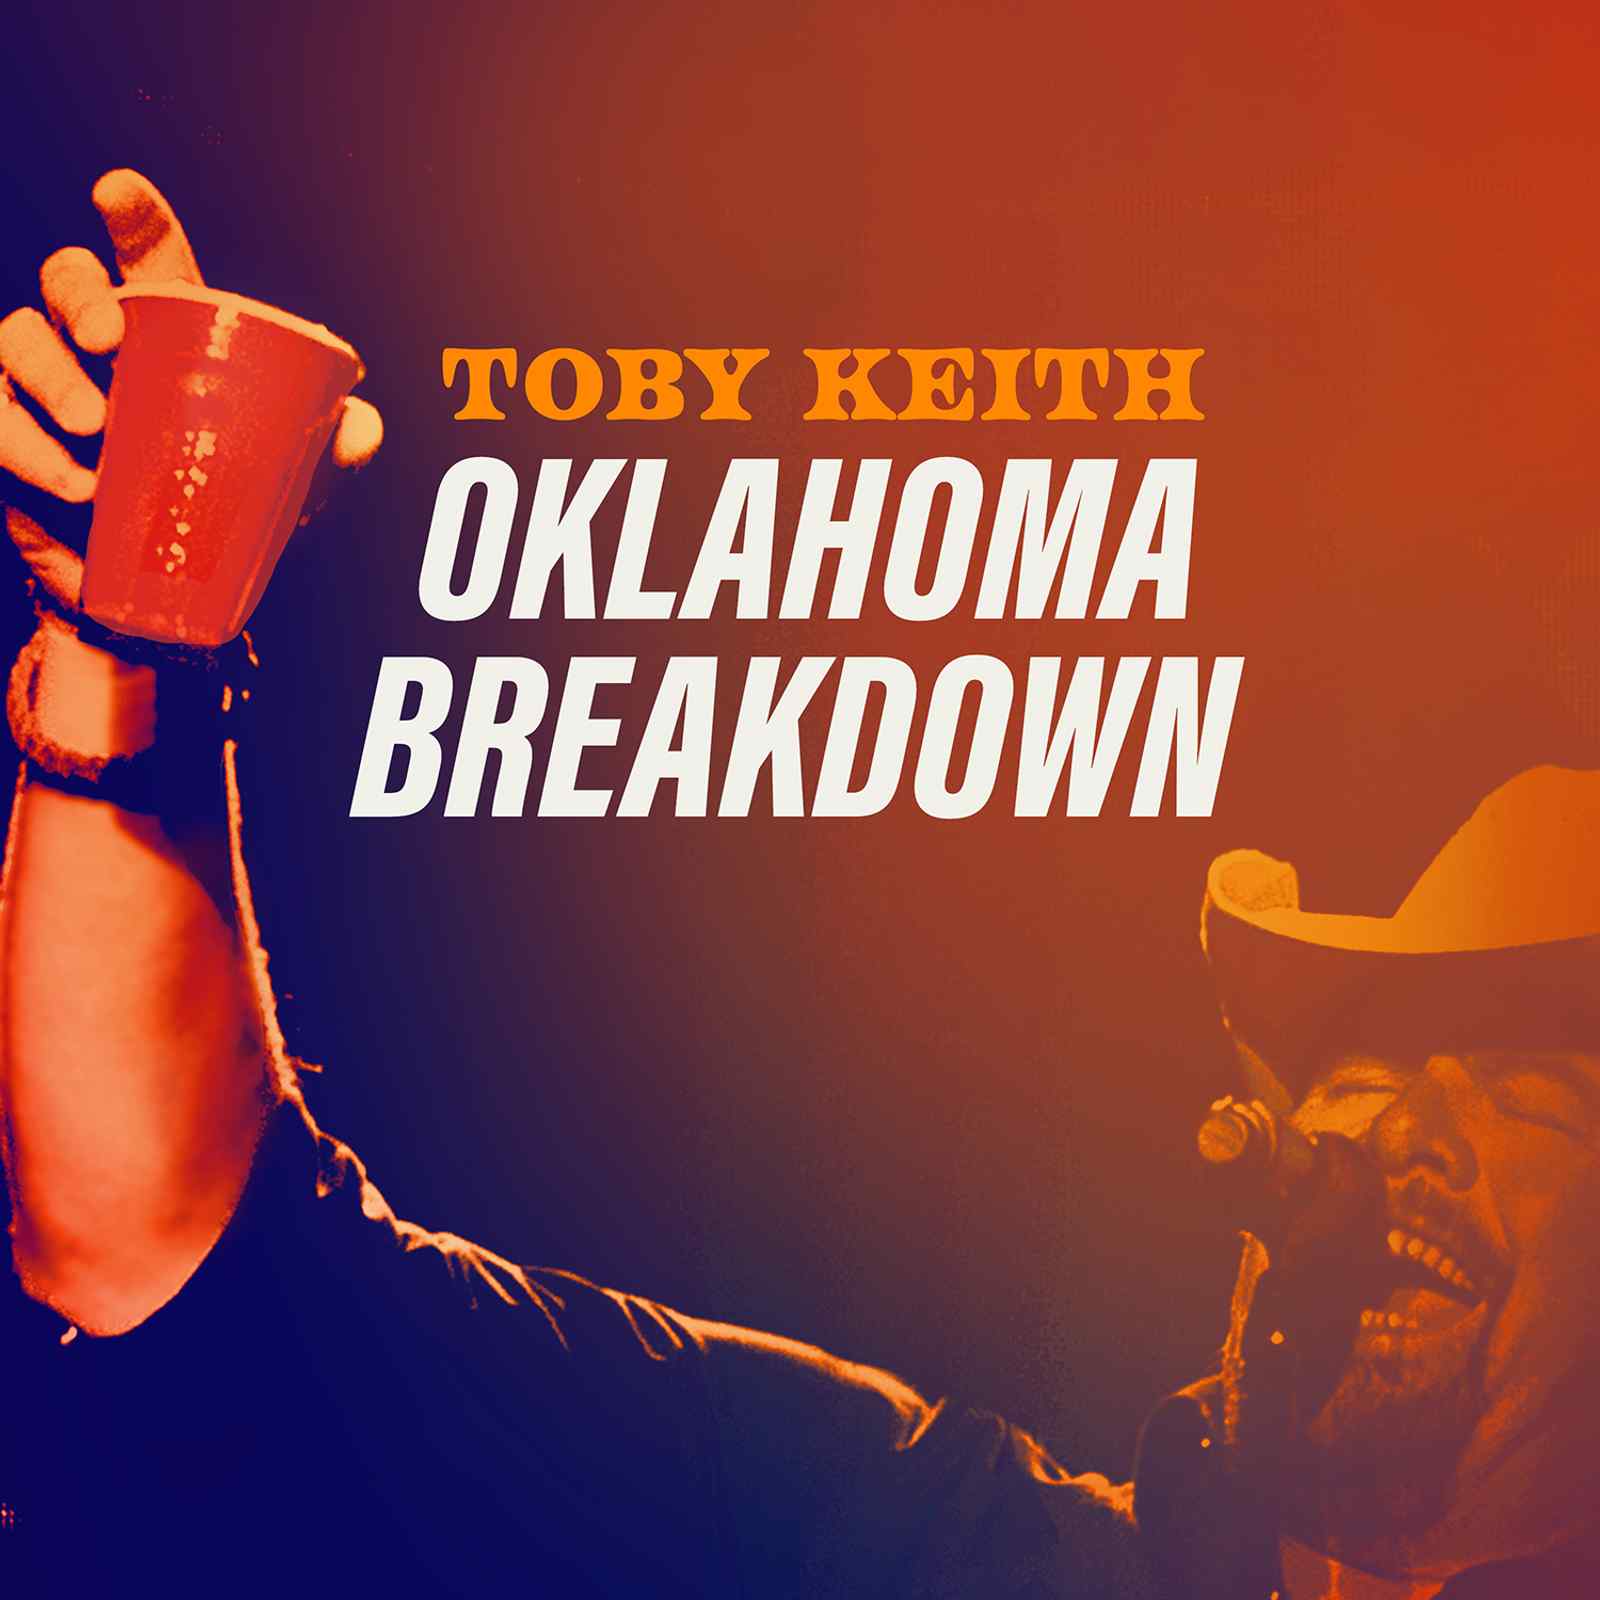 Toby Keith's "Oklahoma Breakdown" Set to Release to Radio June 1